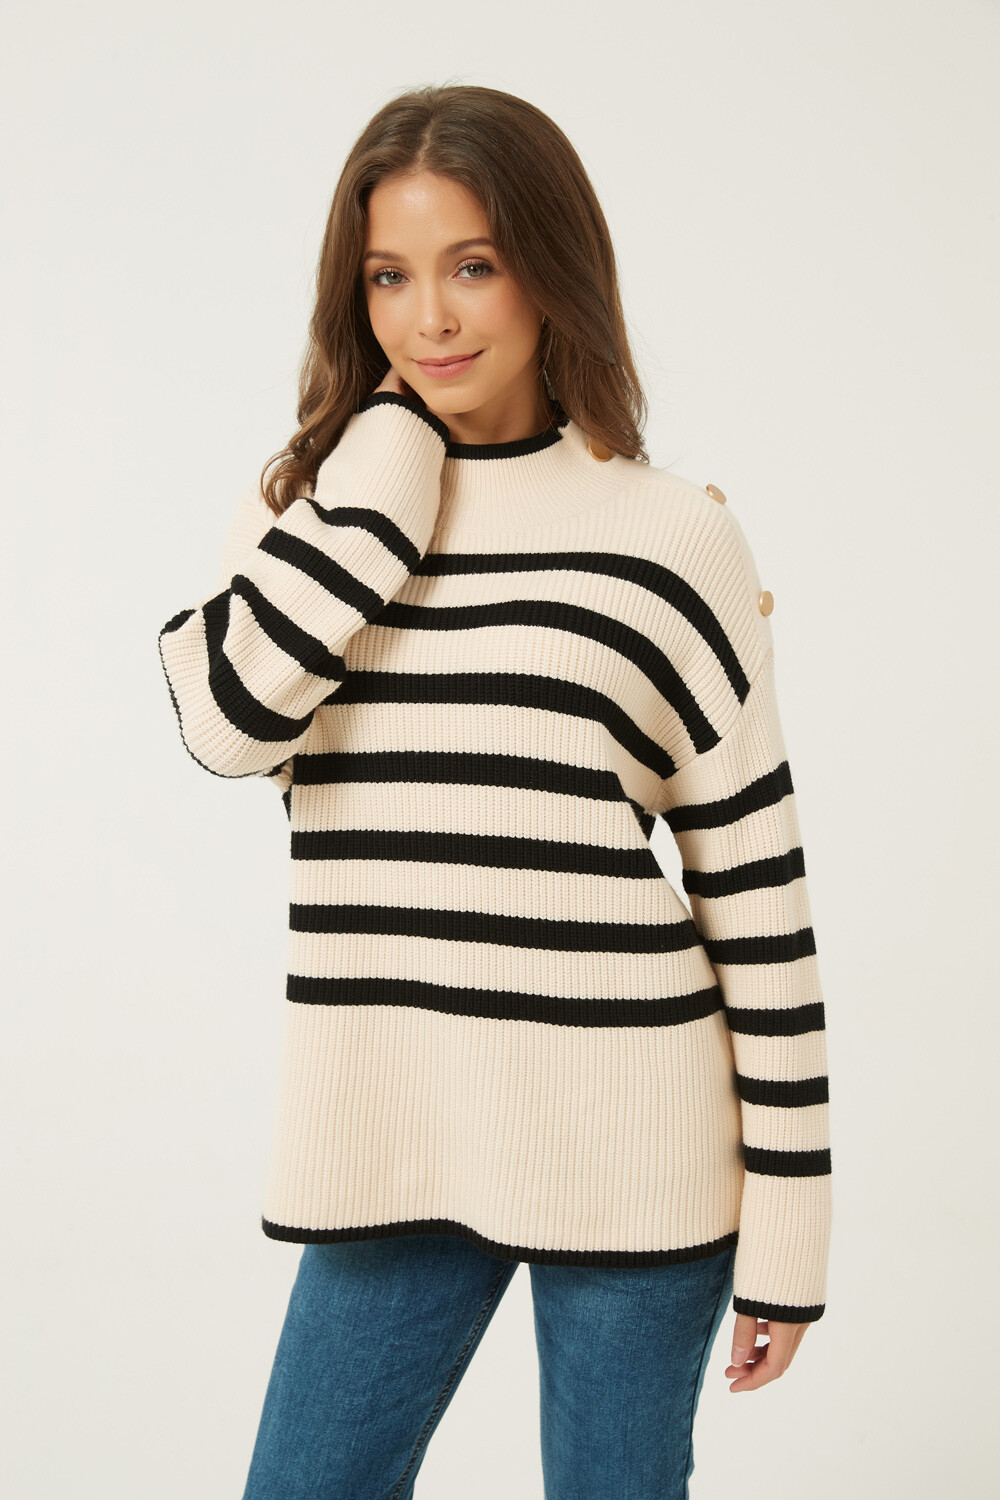 Sweater August Estampado 1